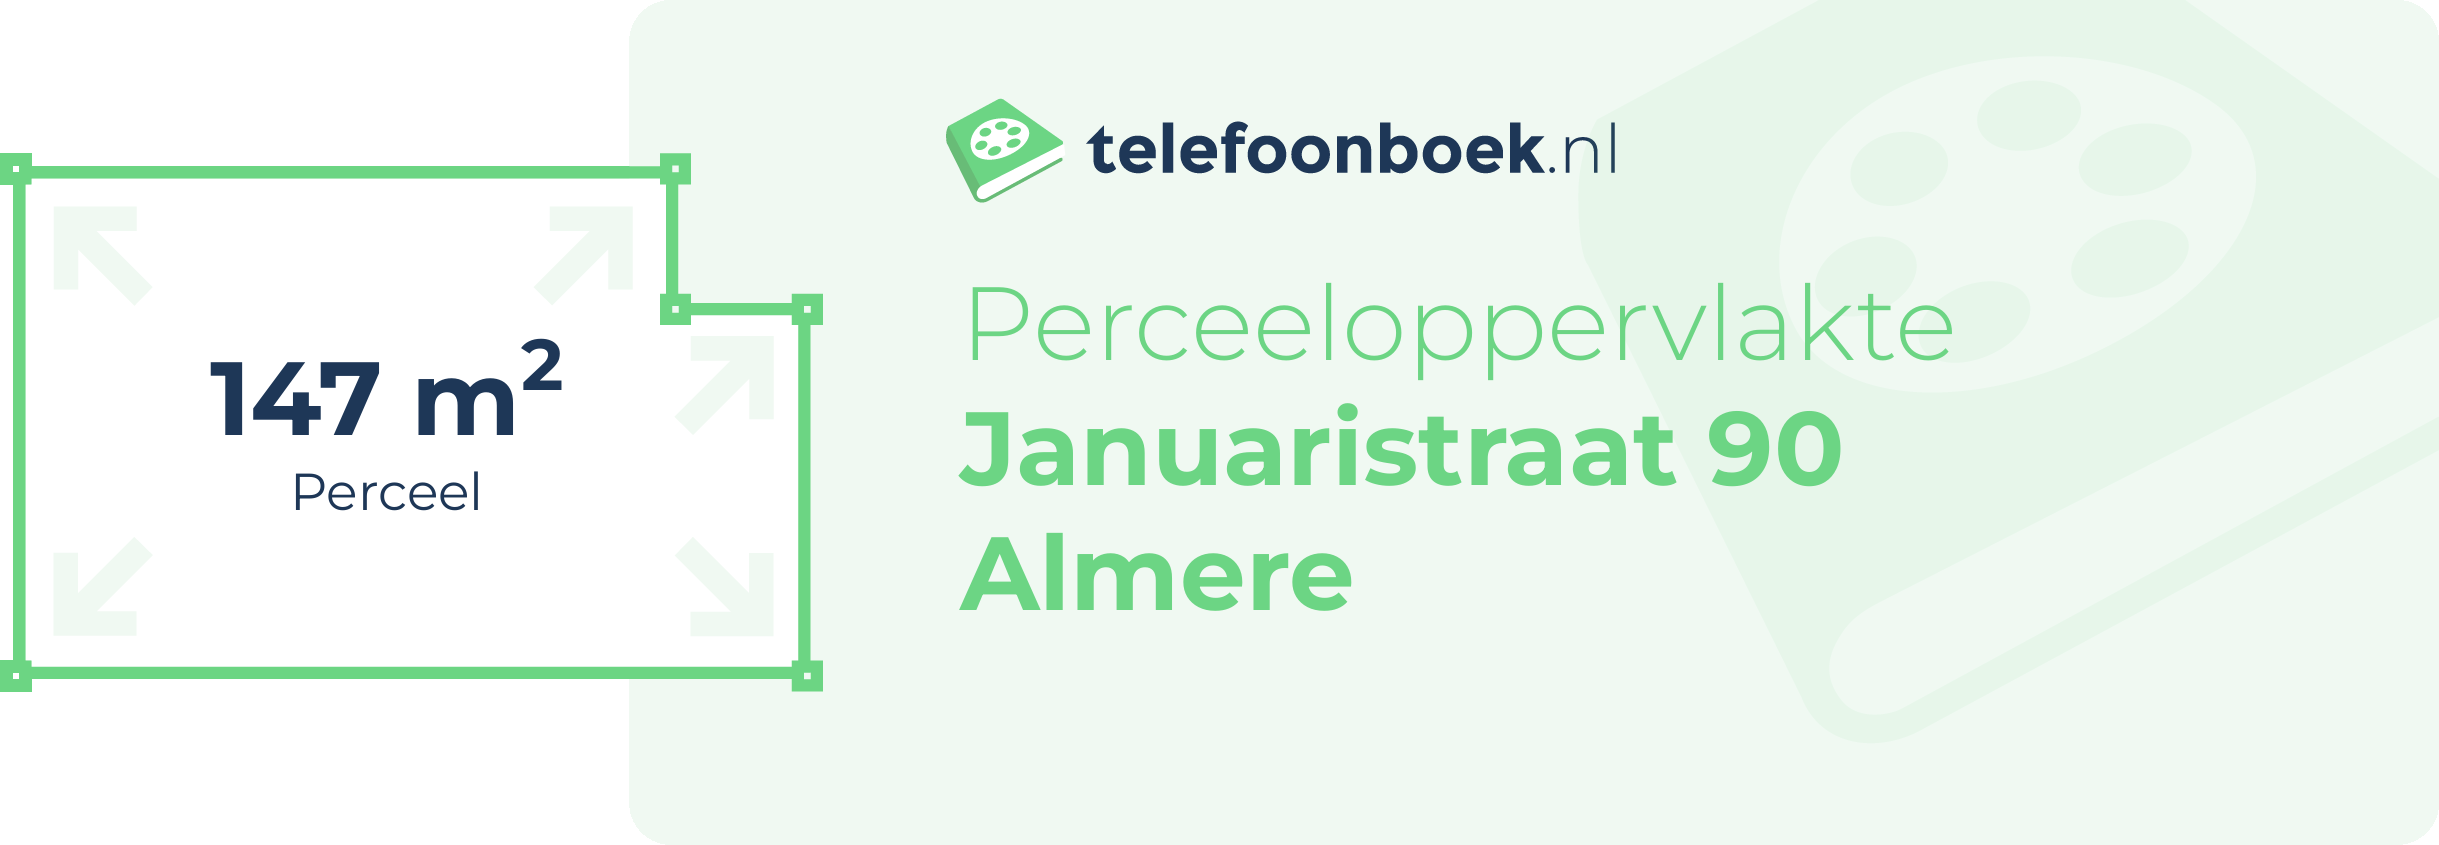 Perceeloppervlakte Januaristraat 90 Almere